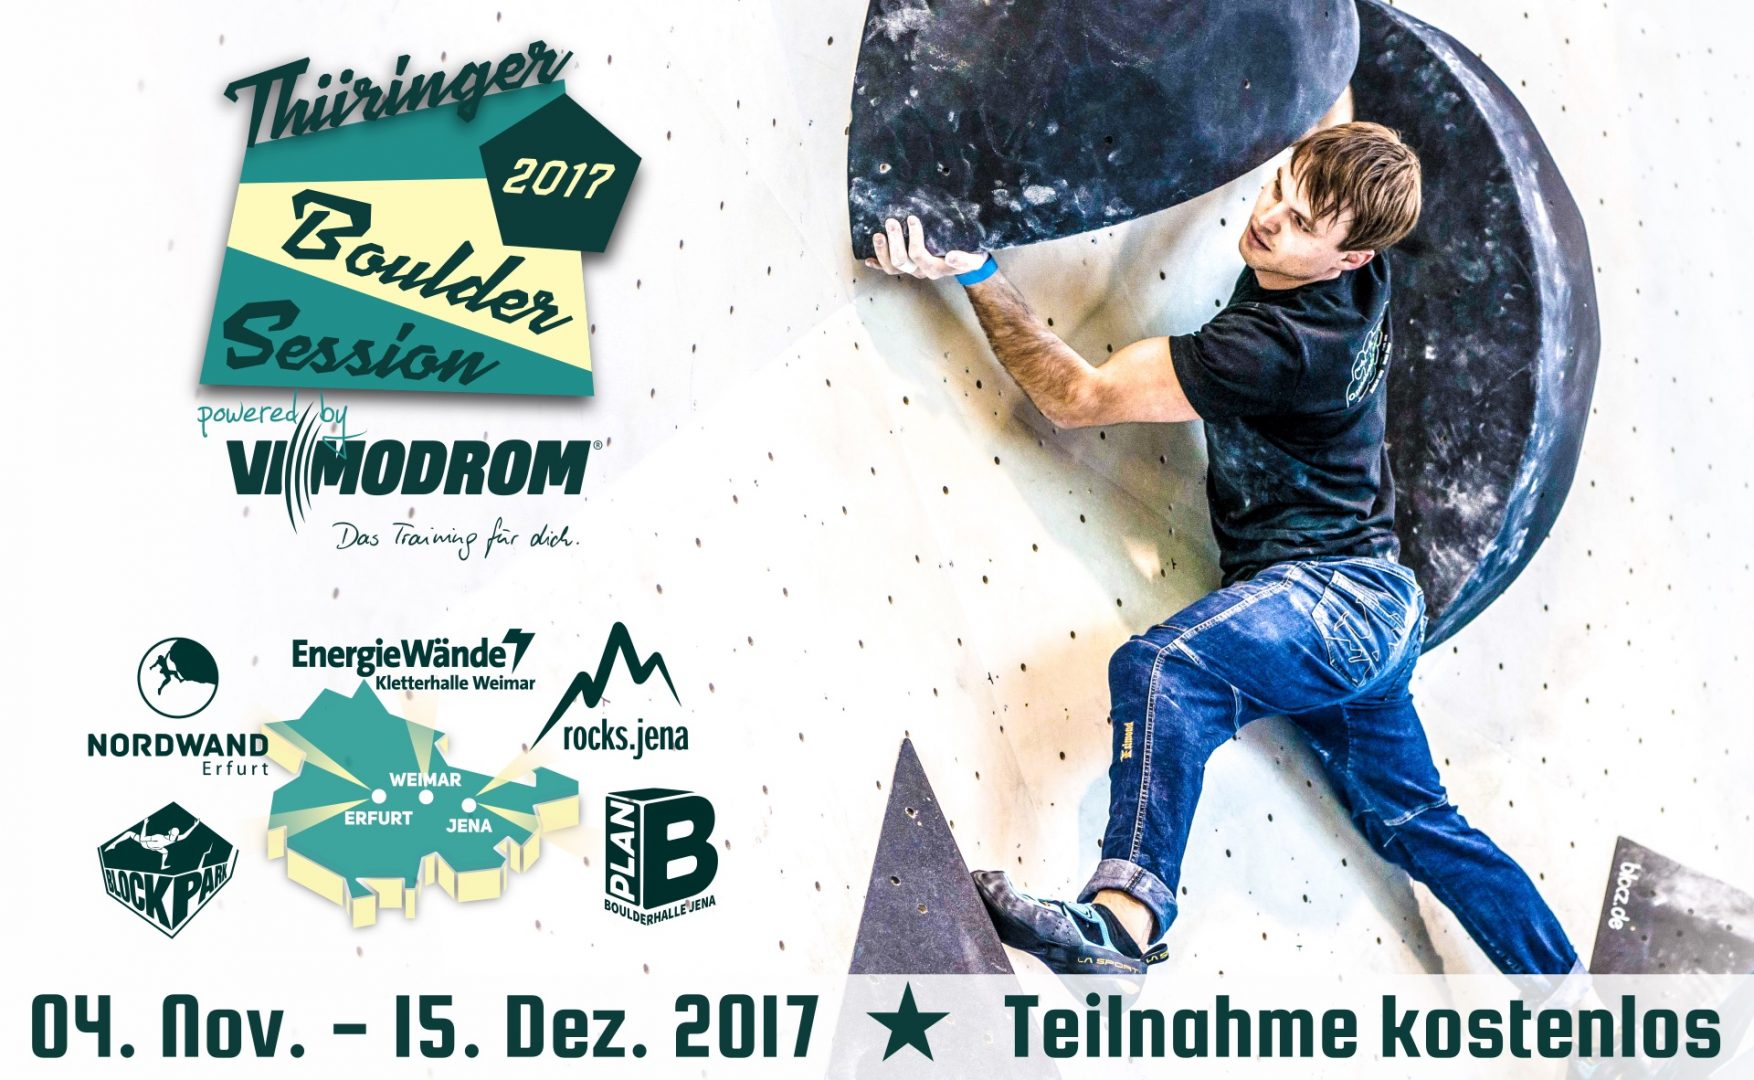 Thüringer Boulder Session 2017